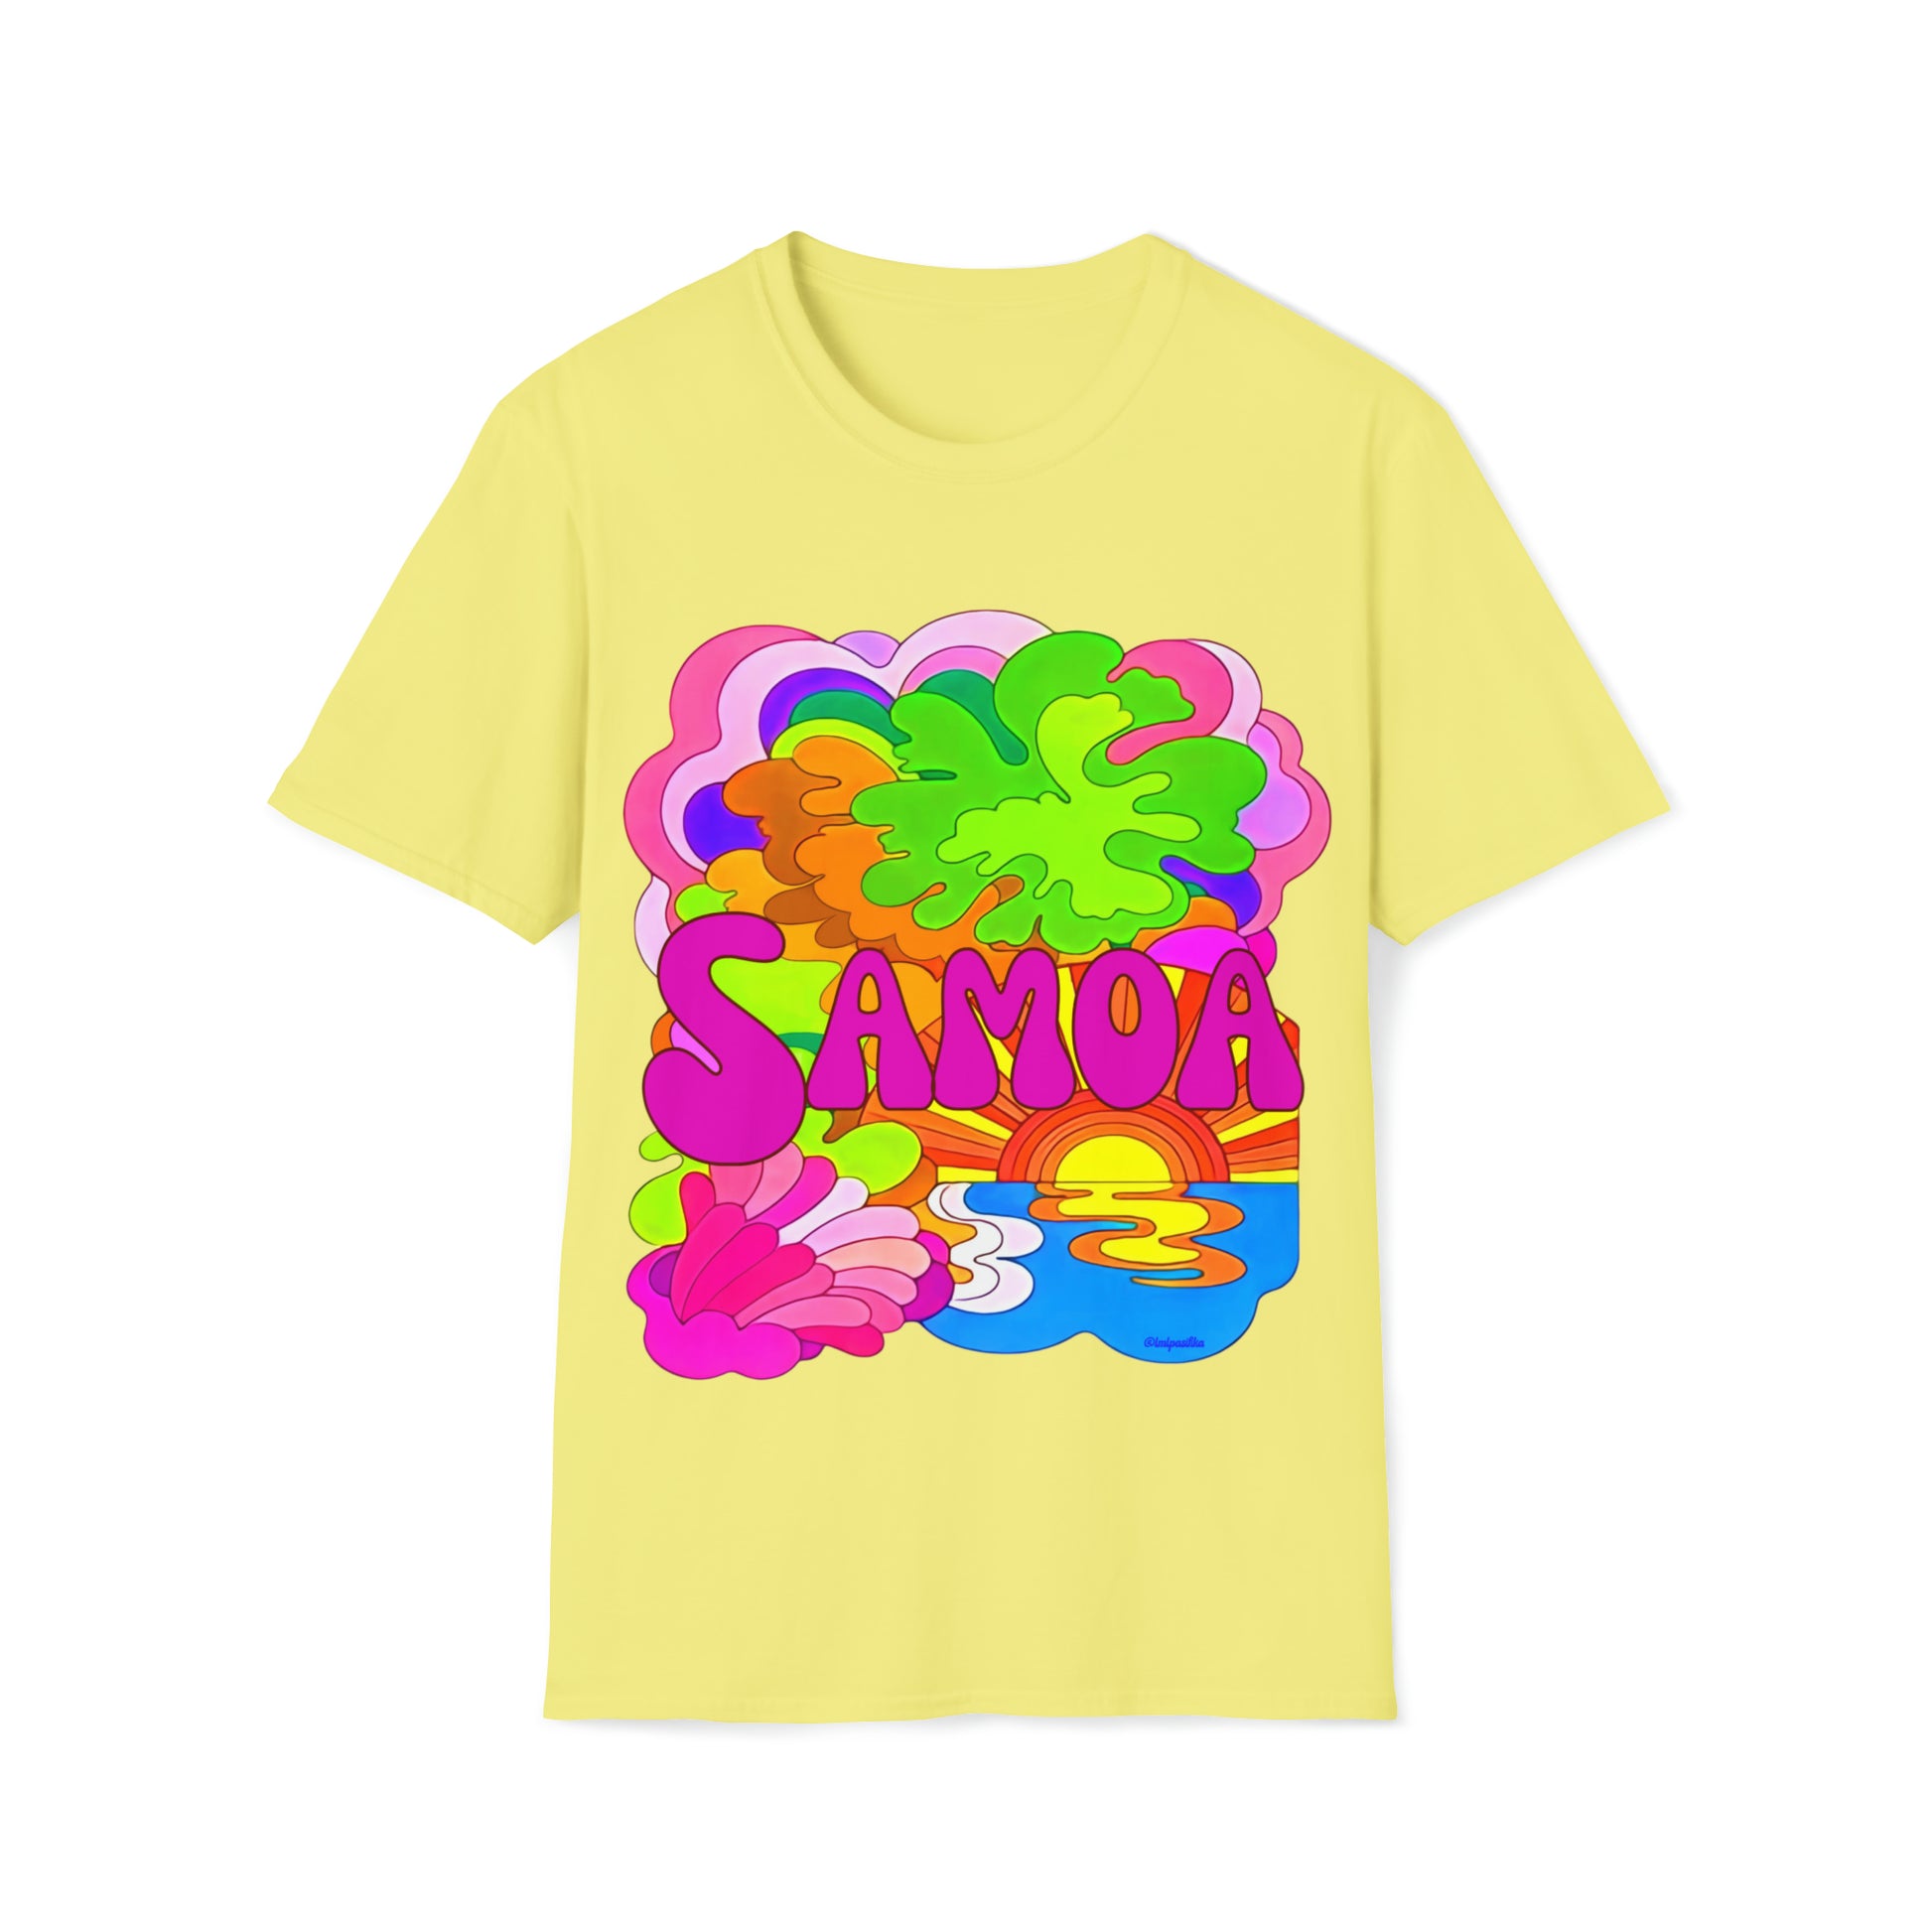 70s Samoa Graphic Tee Psychedelic Shirt Samoan Hippie Vintage Groovy Colorful Aesthetic Art Shirt 70s Inspired-Heliaki